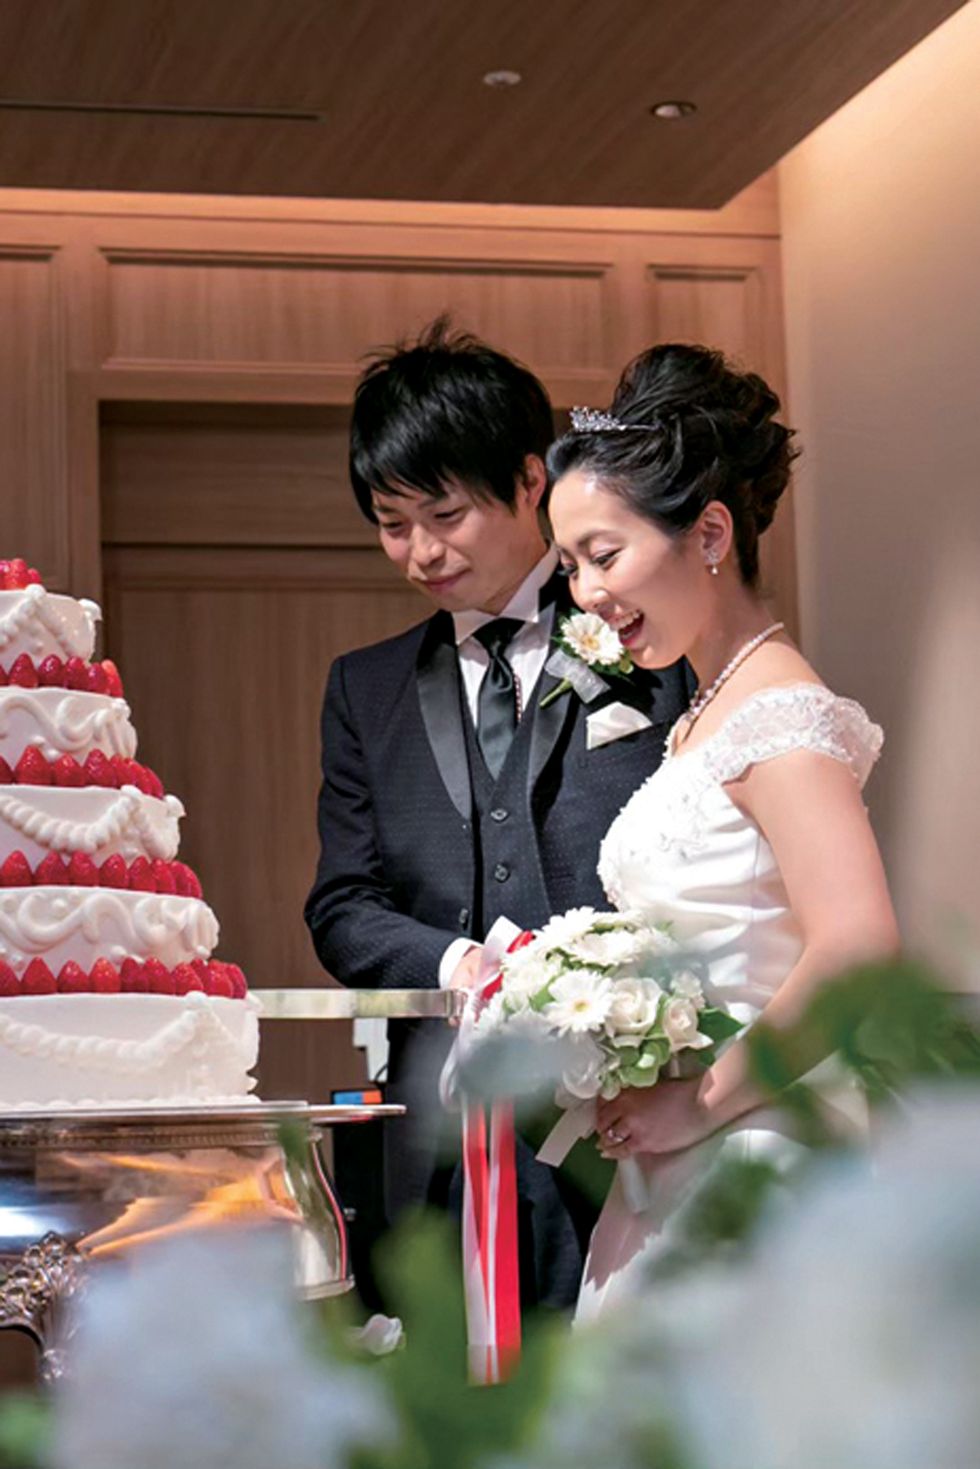 Photograph, Marriage, Ceremony, Wedding, Bride, Bridal clothing, Wedding ceremony supply, Wedding dress, Event, Dress, 